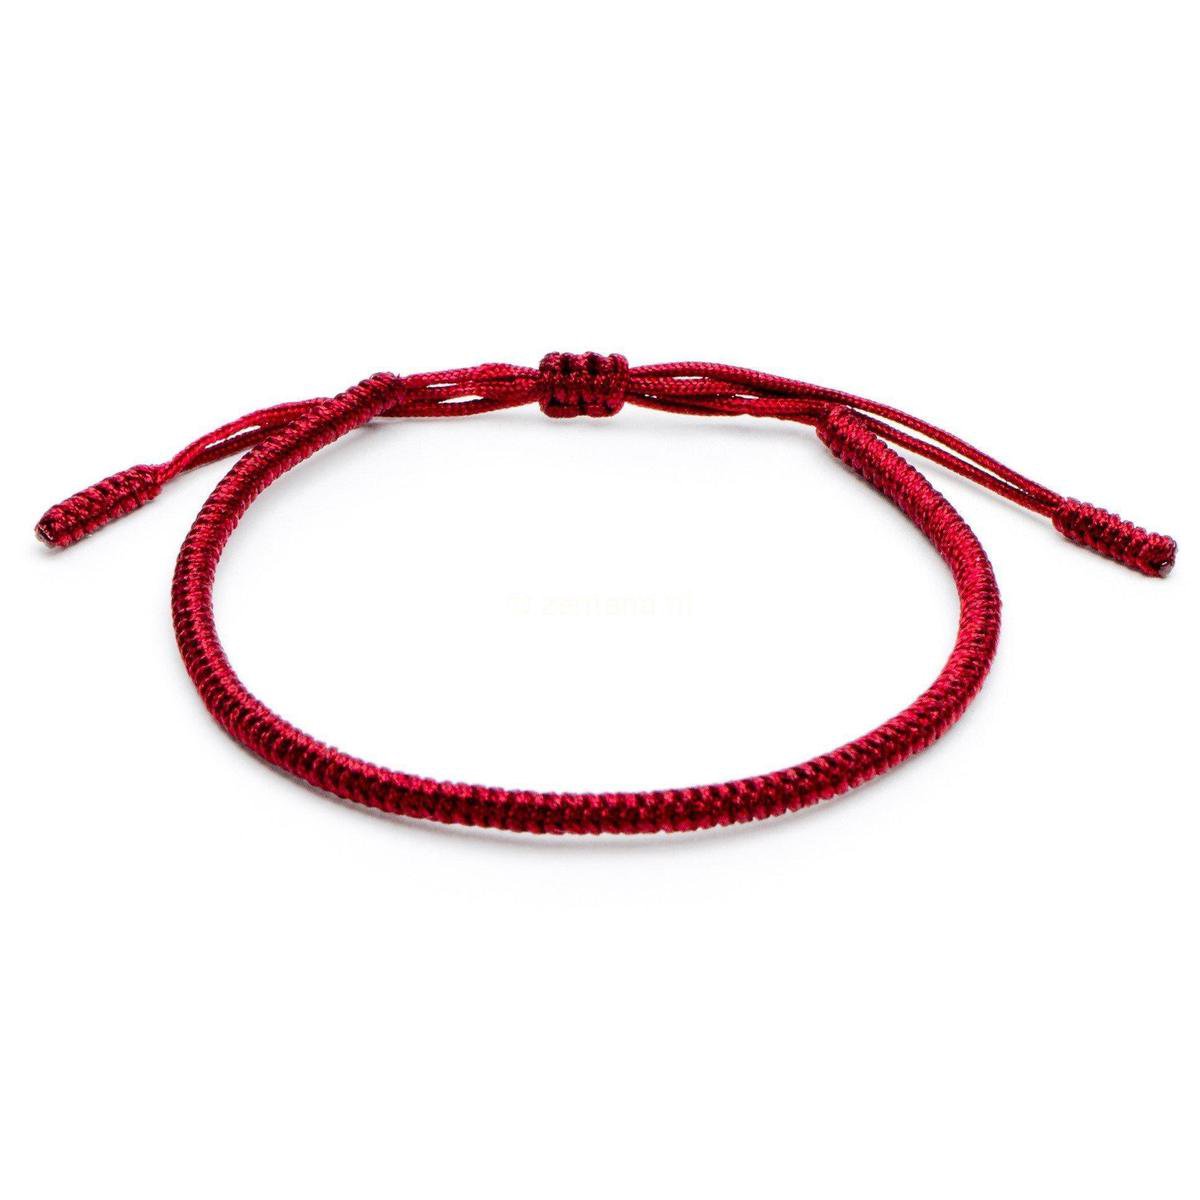 Zentana Tibetaanse armband - Rood | bol.com